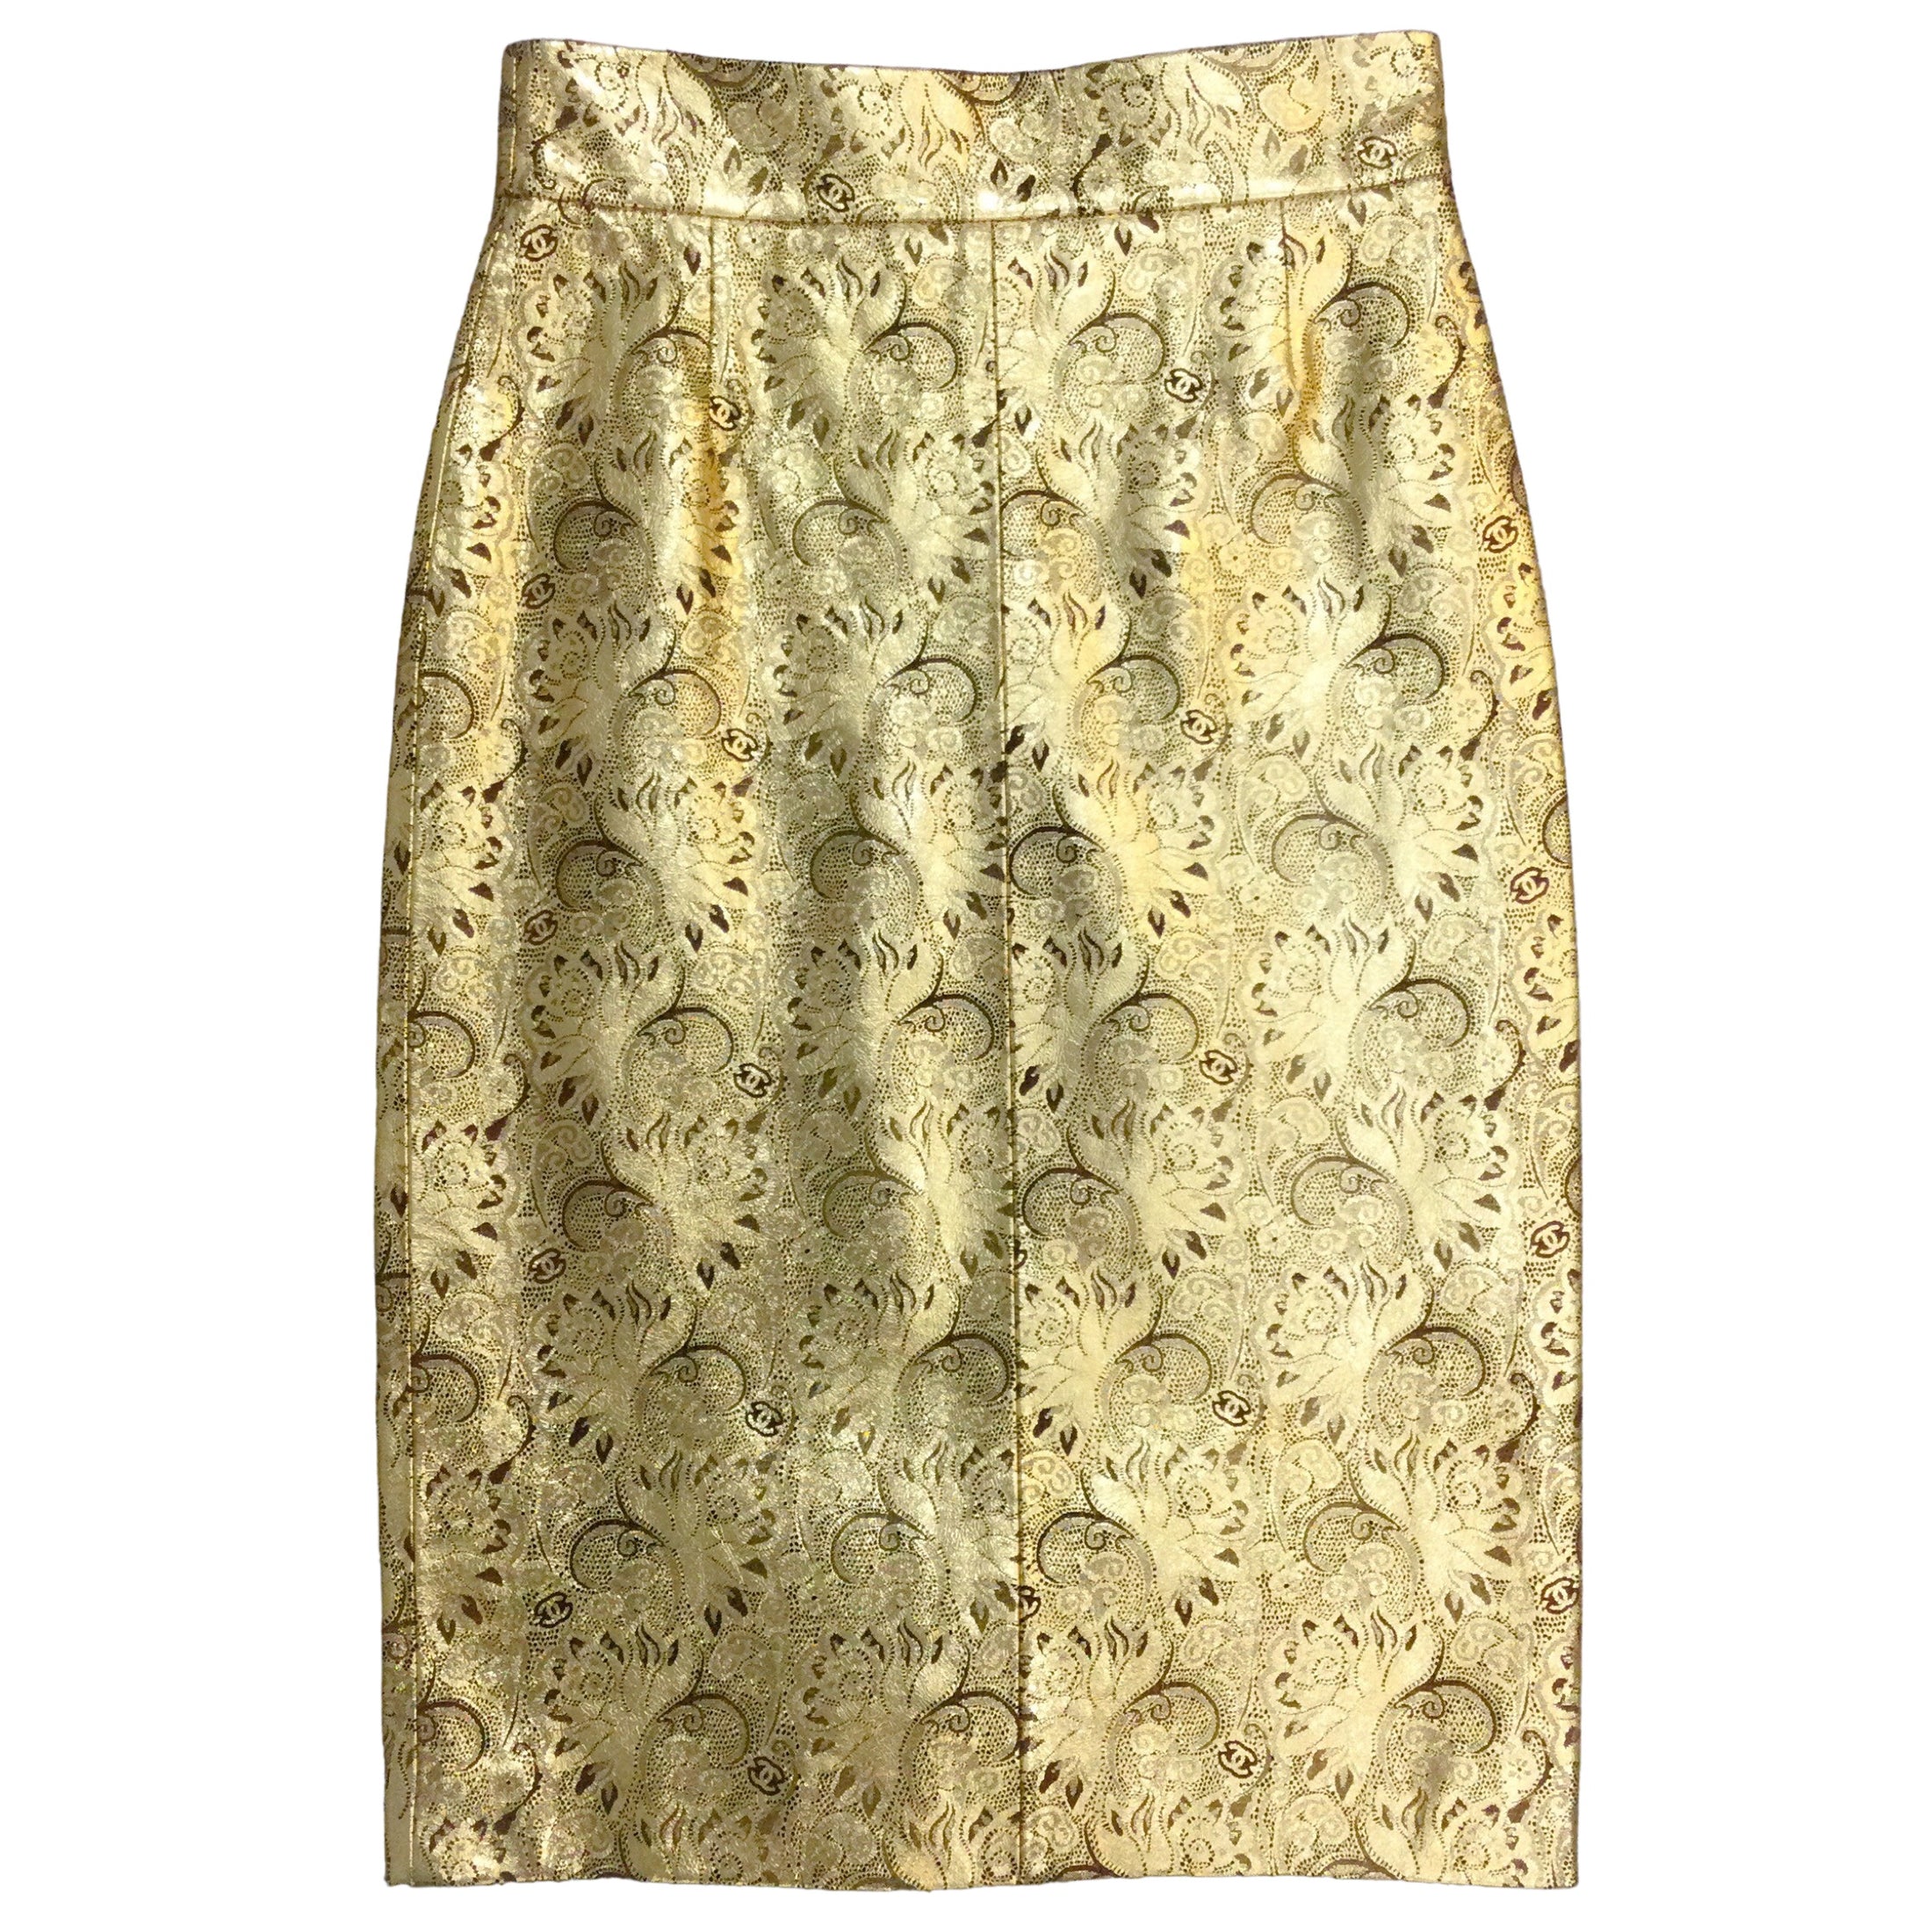 Chanel Gold Metallic Buffalo Skin Leather Skirt